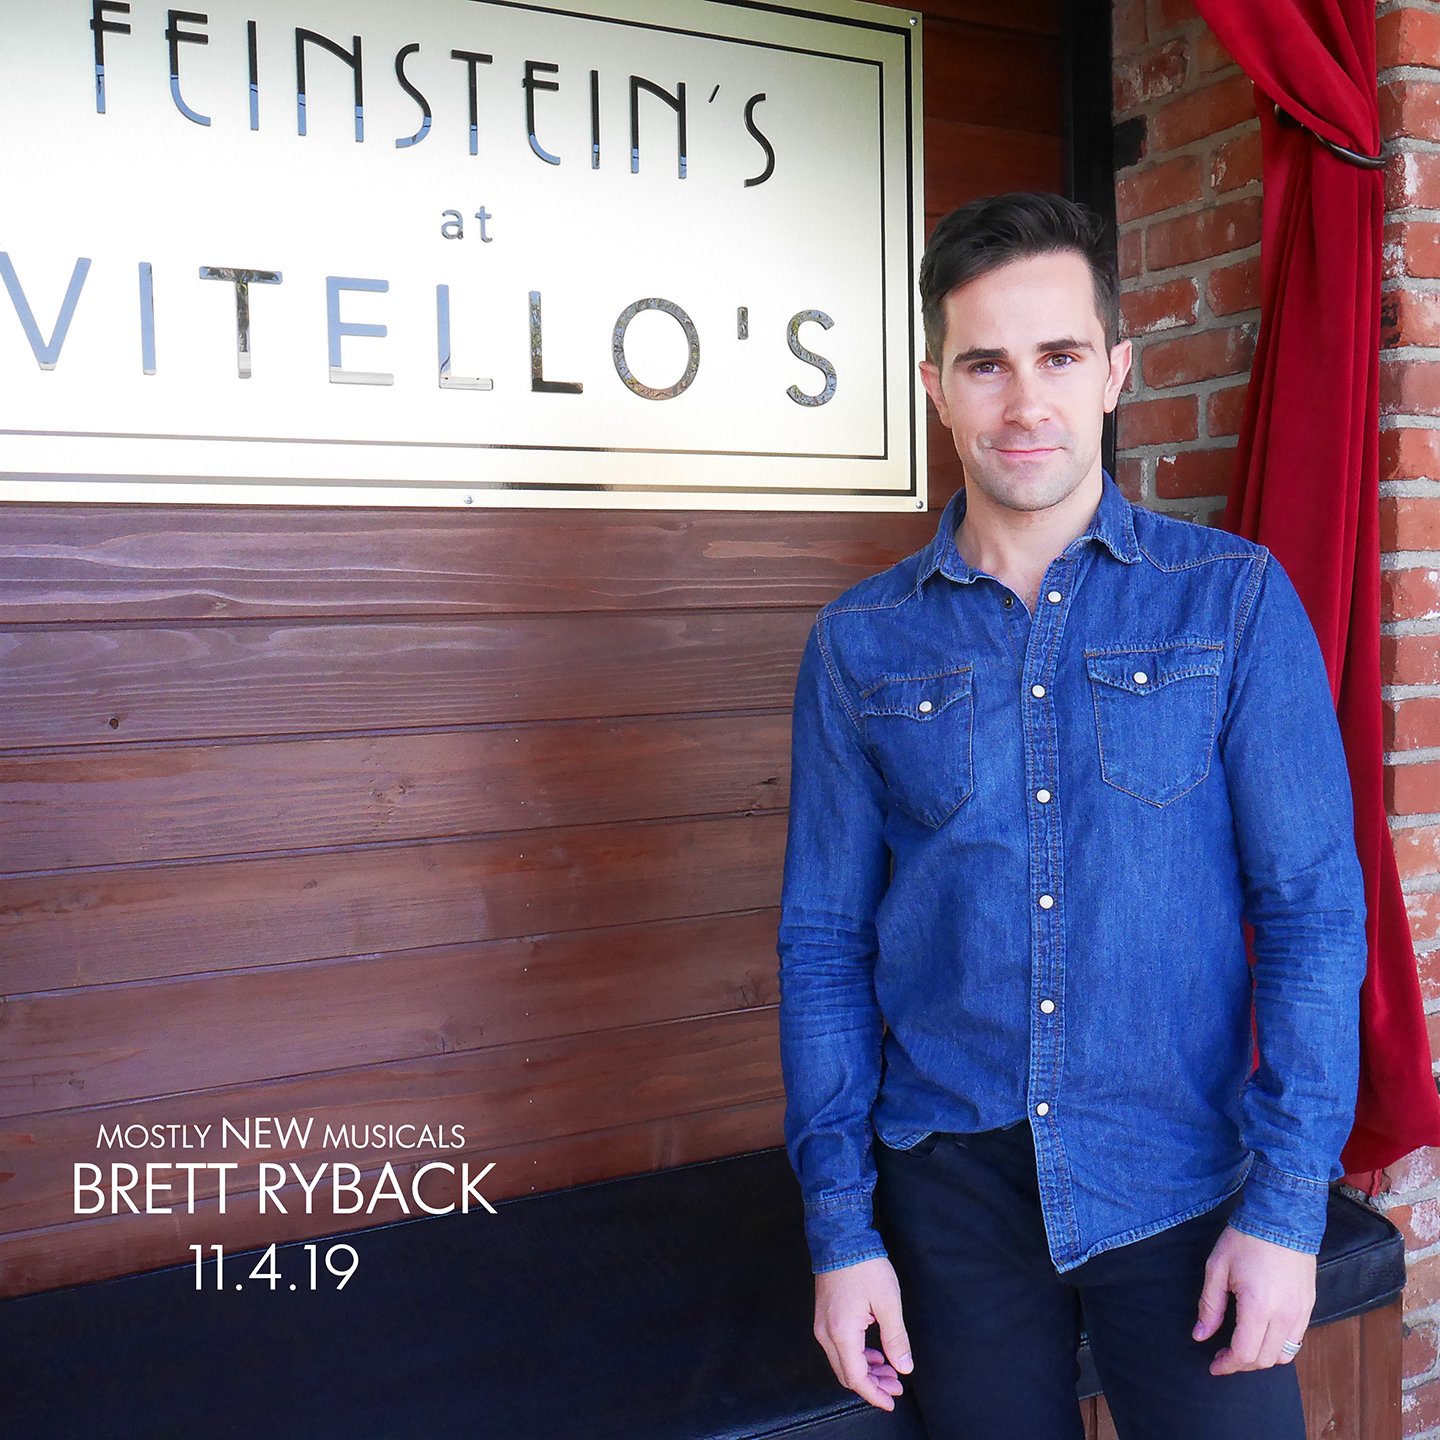 Brett Ryback at Feinstein's at Vitello's 11.4.19